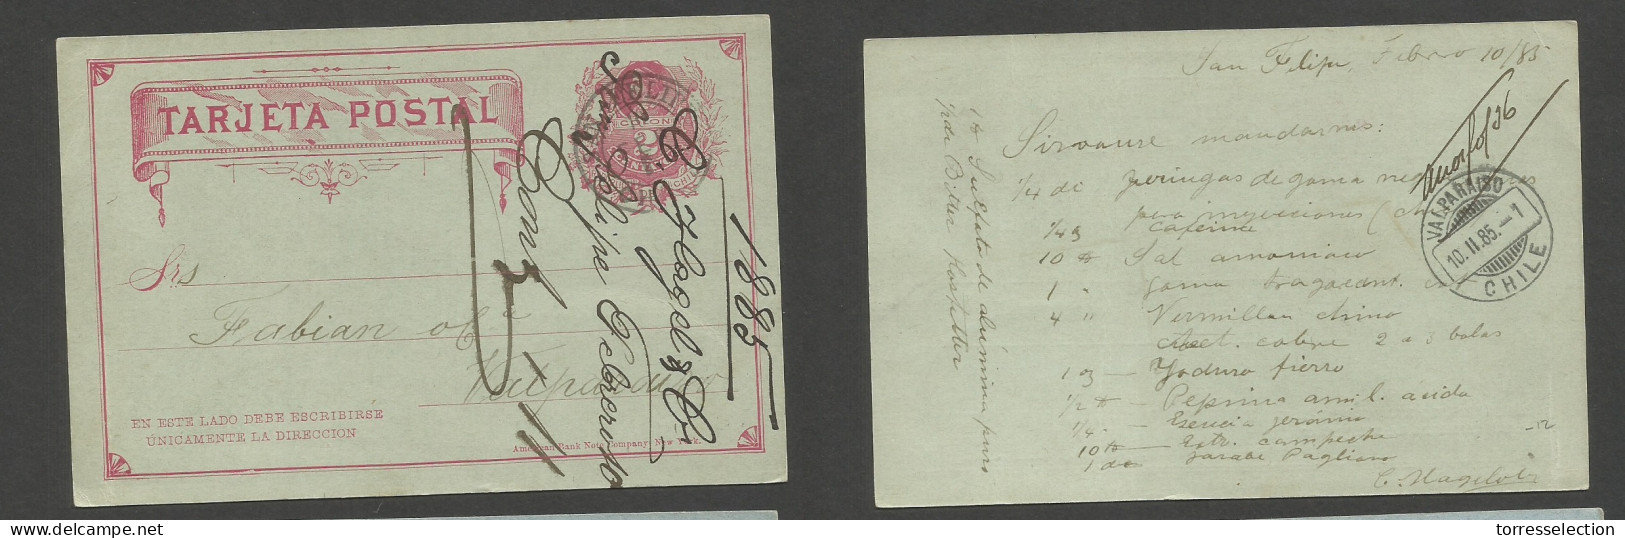 CHILE - Stationery. 1885 (10 Feb) San Felipe - Valp 2c Red Bluish Stat Card. Fine Early Usage. SALE. - Chili